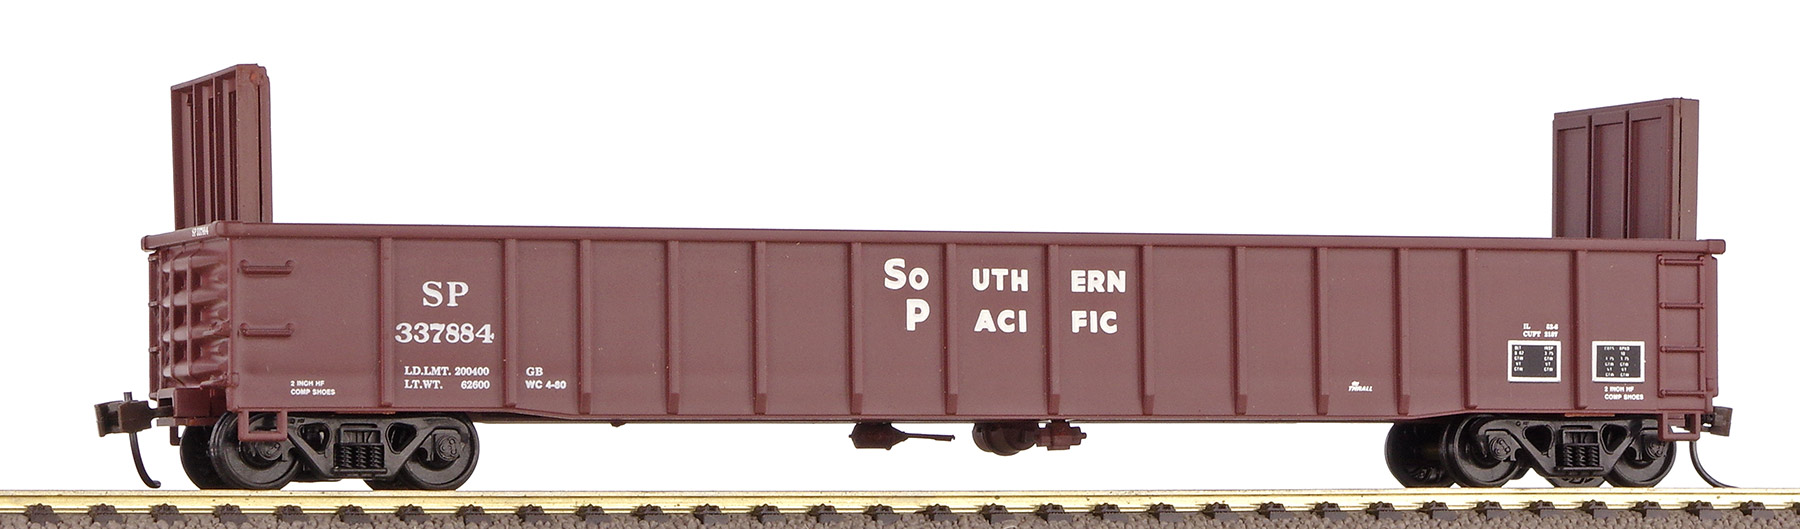 модель Train 15907-85